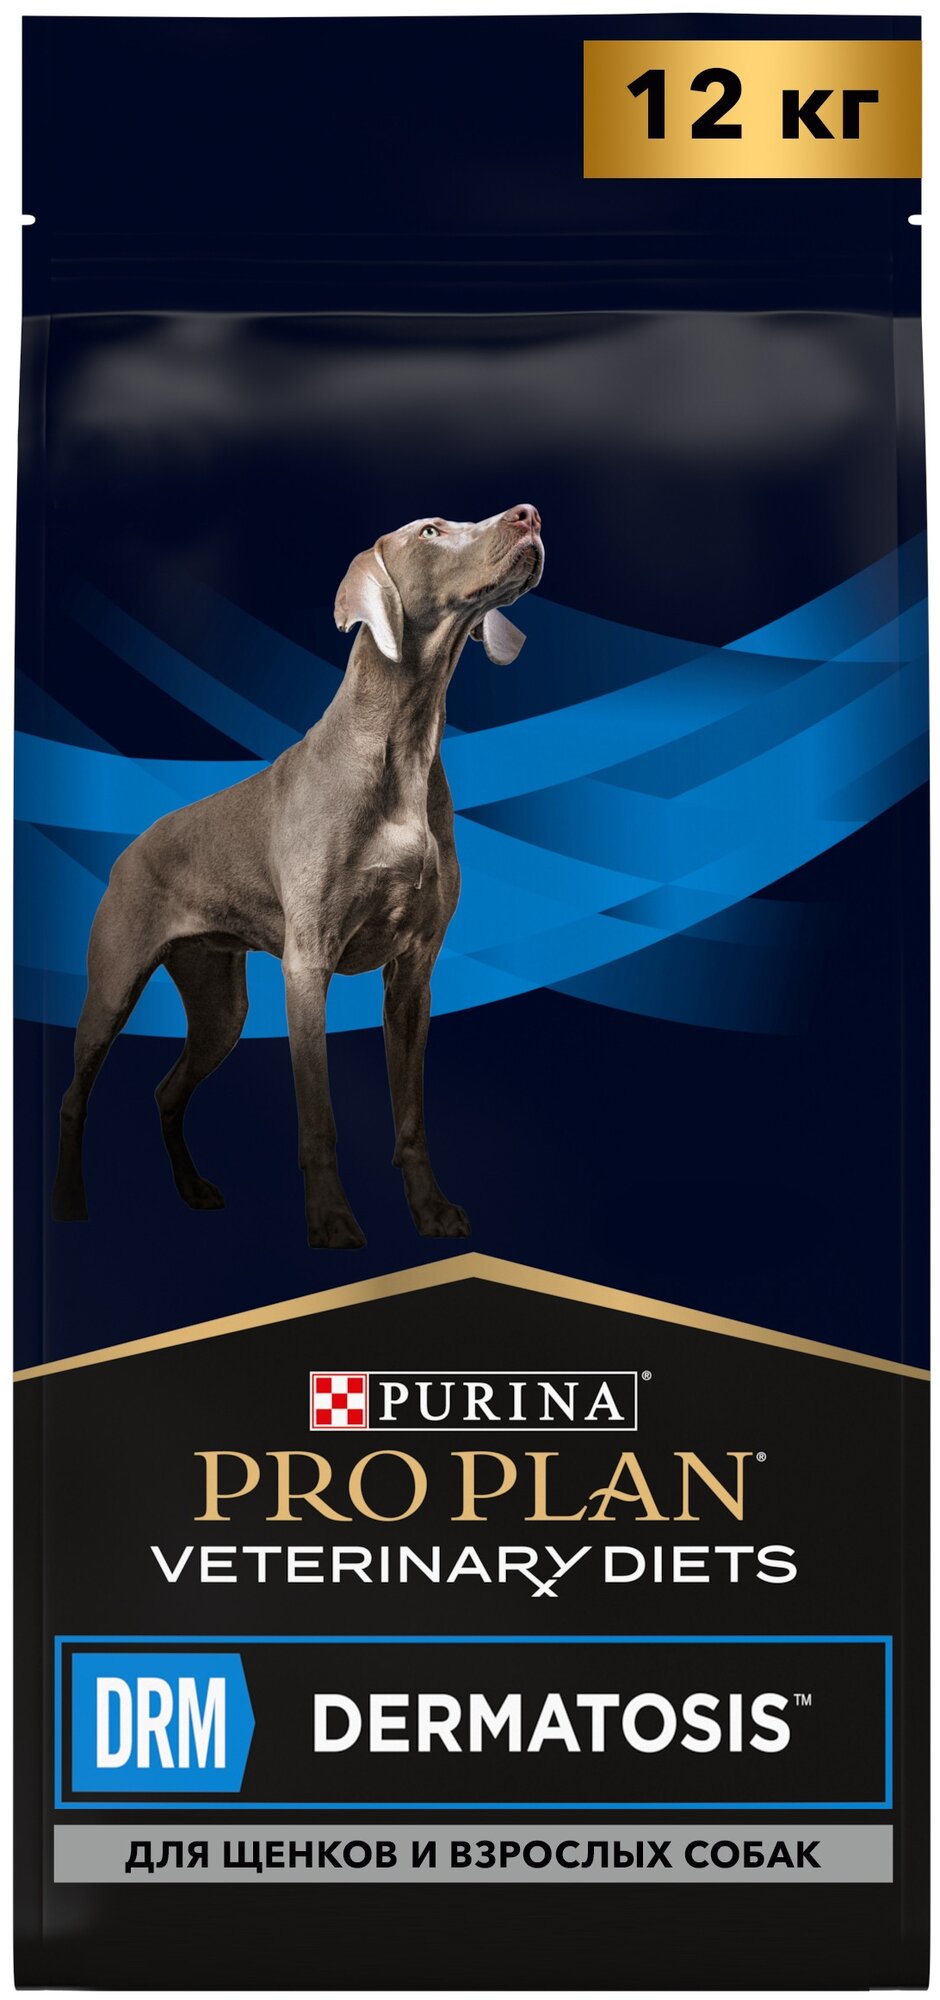 Сухой корм Pro Plan Veterinary diets DRM корм для собак при дерматозах , Пакет, 12 кг